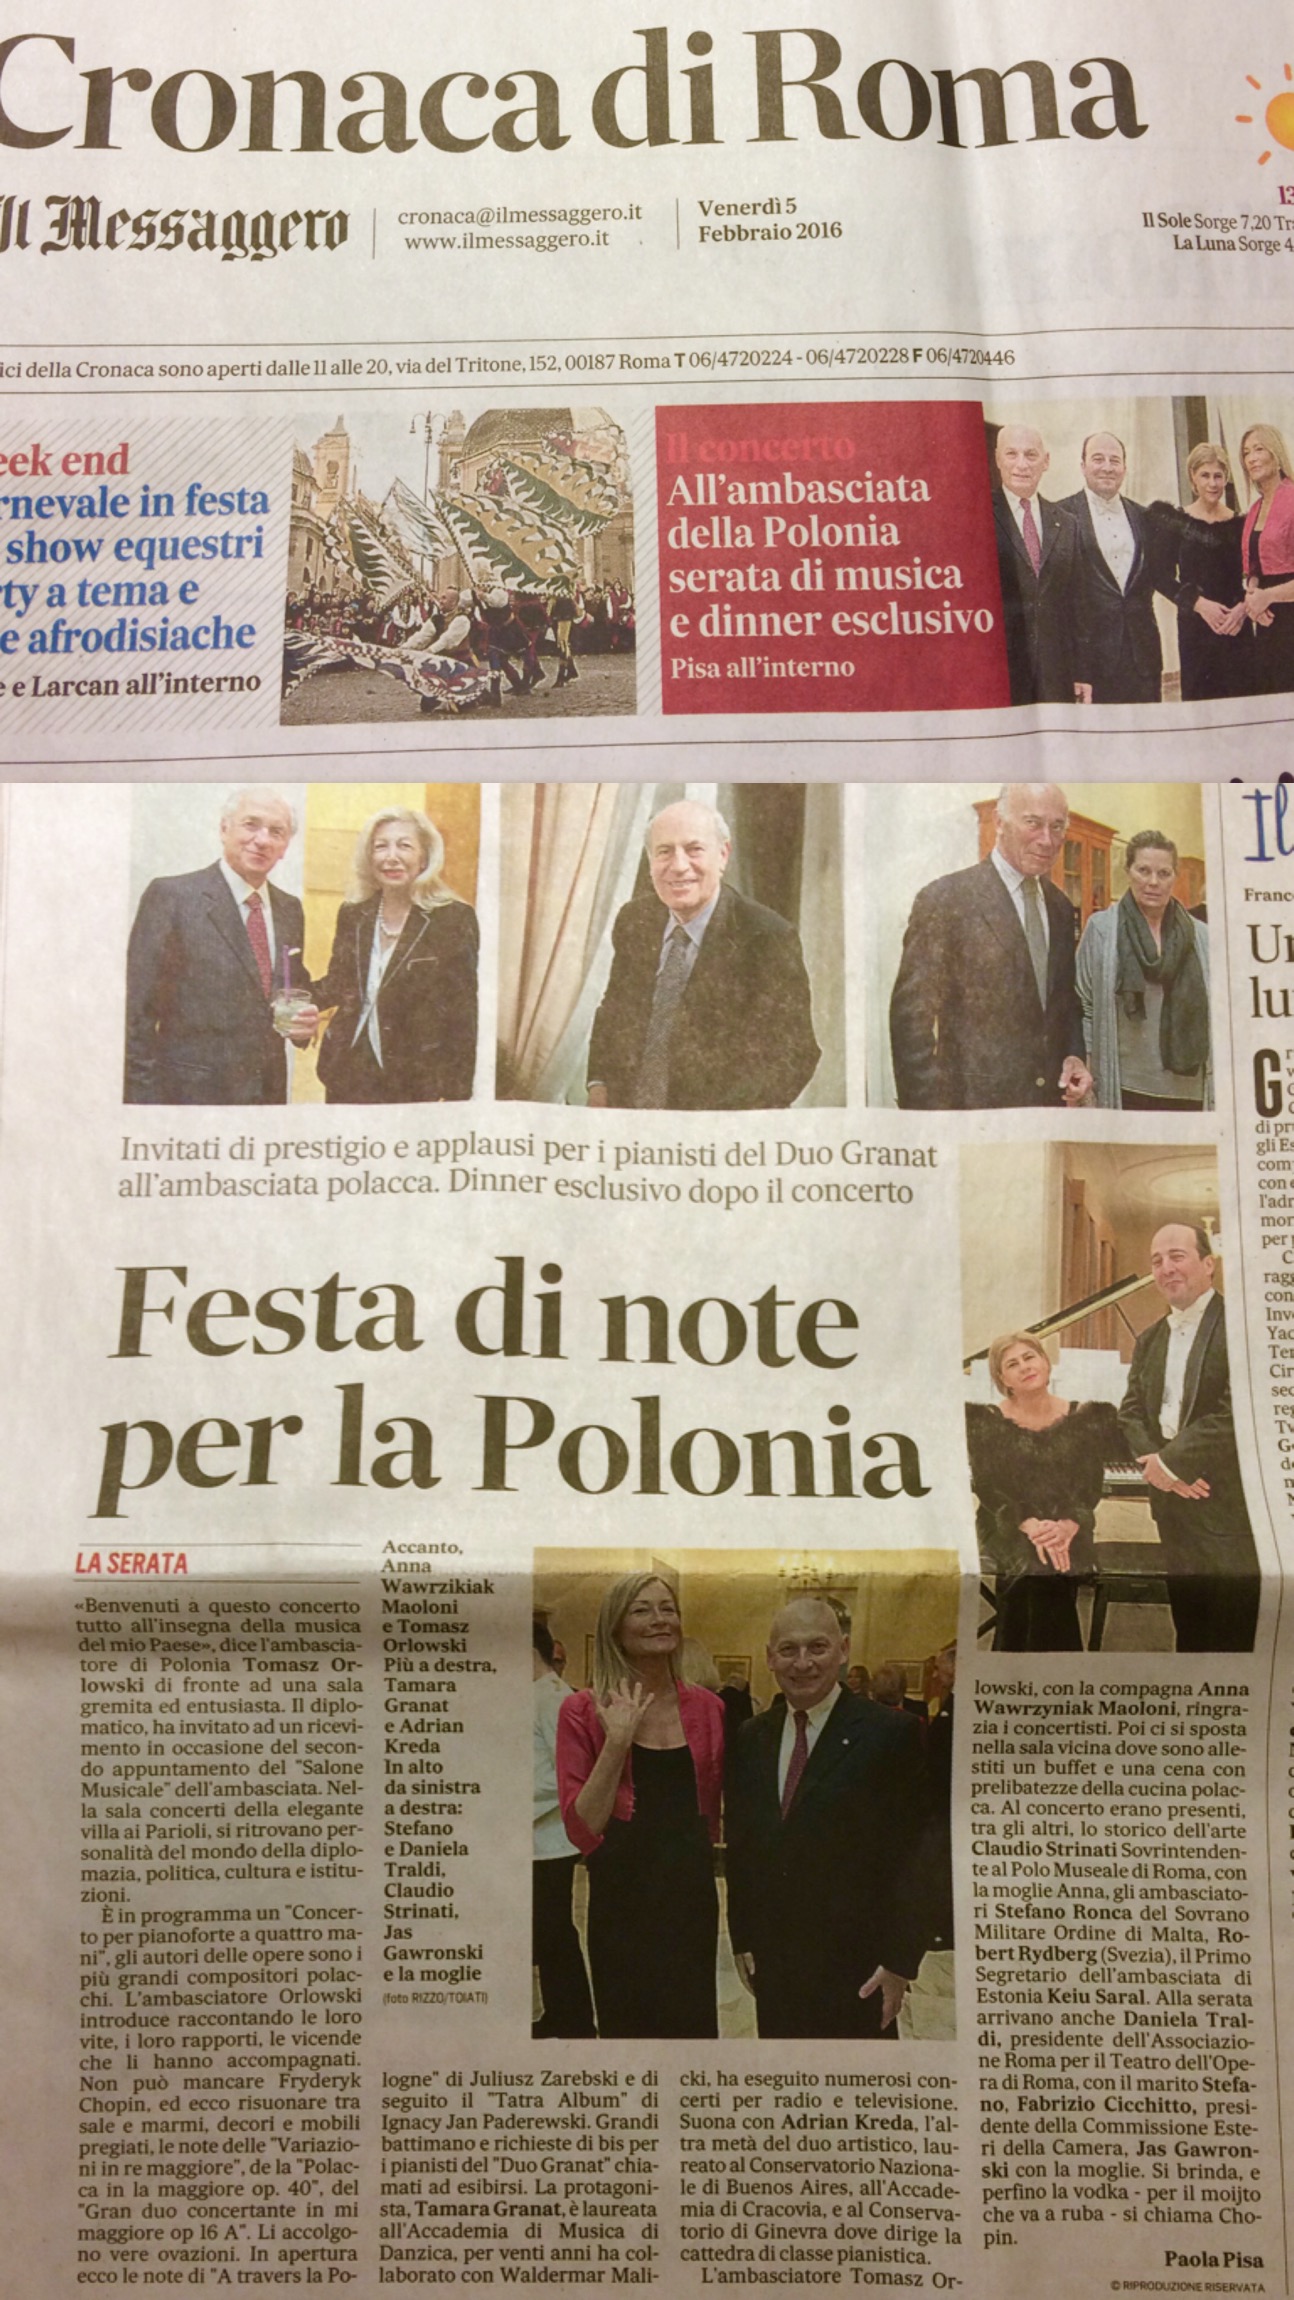 Cronaca di Roma, February 5, 2016